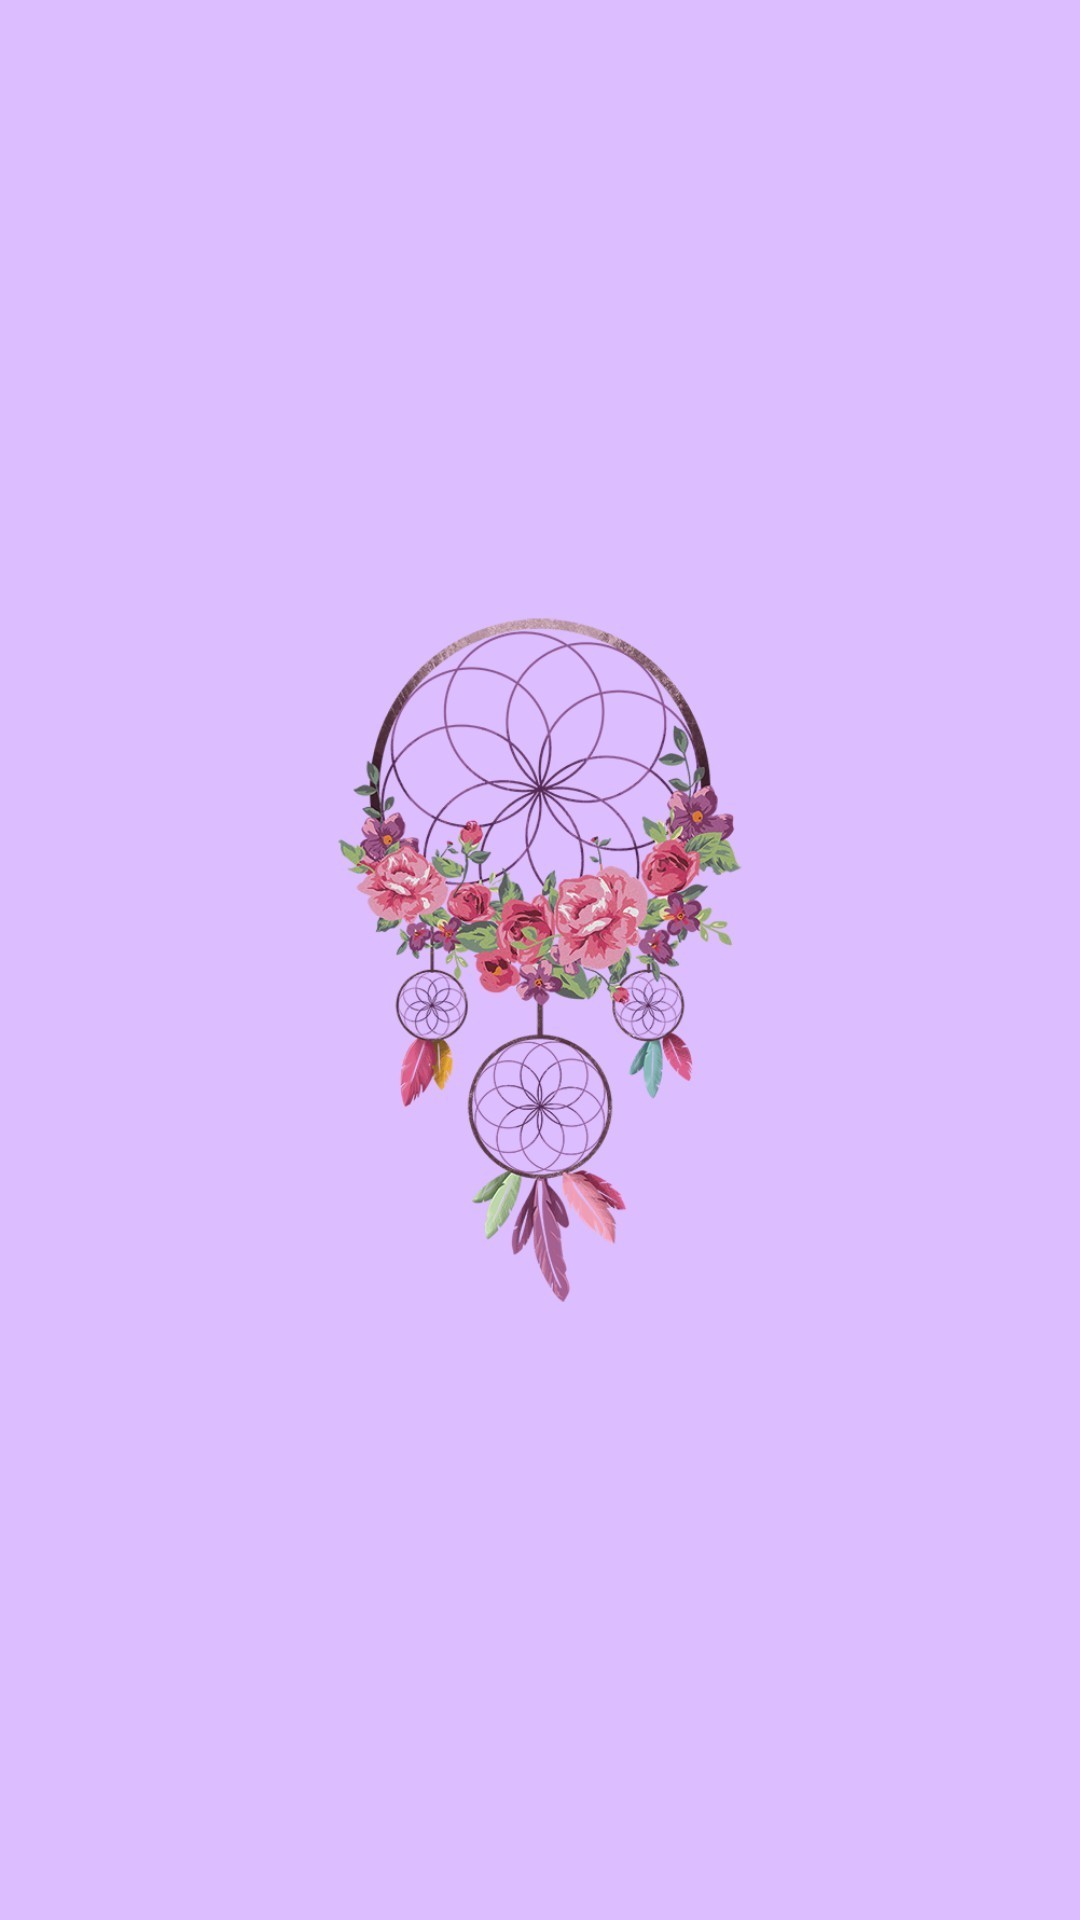 dreamcatcher wallpaper tumblr,product,pink,violet,lilac,illustration